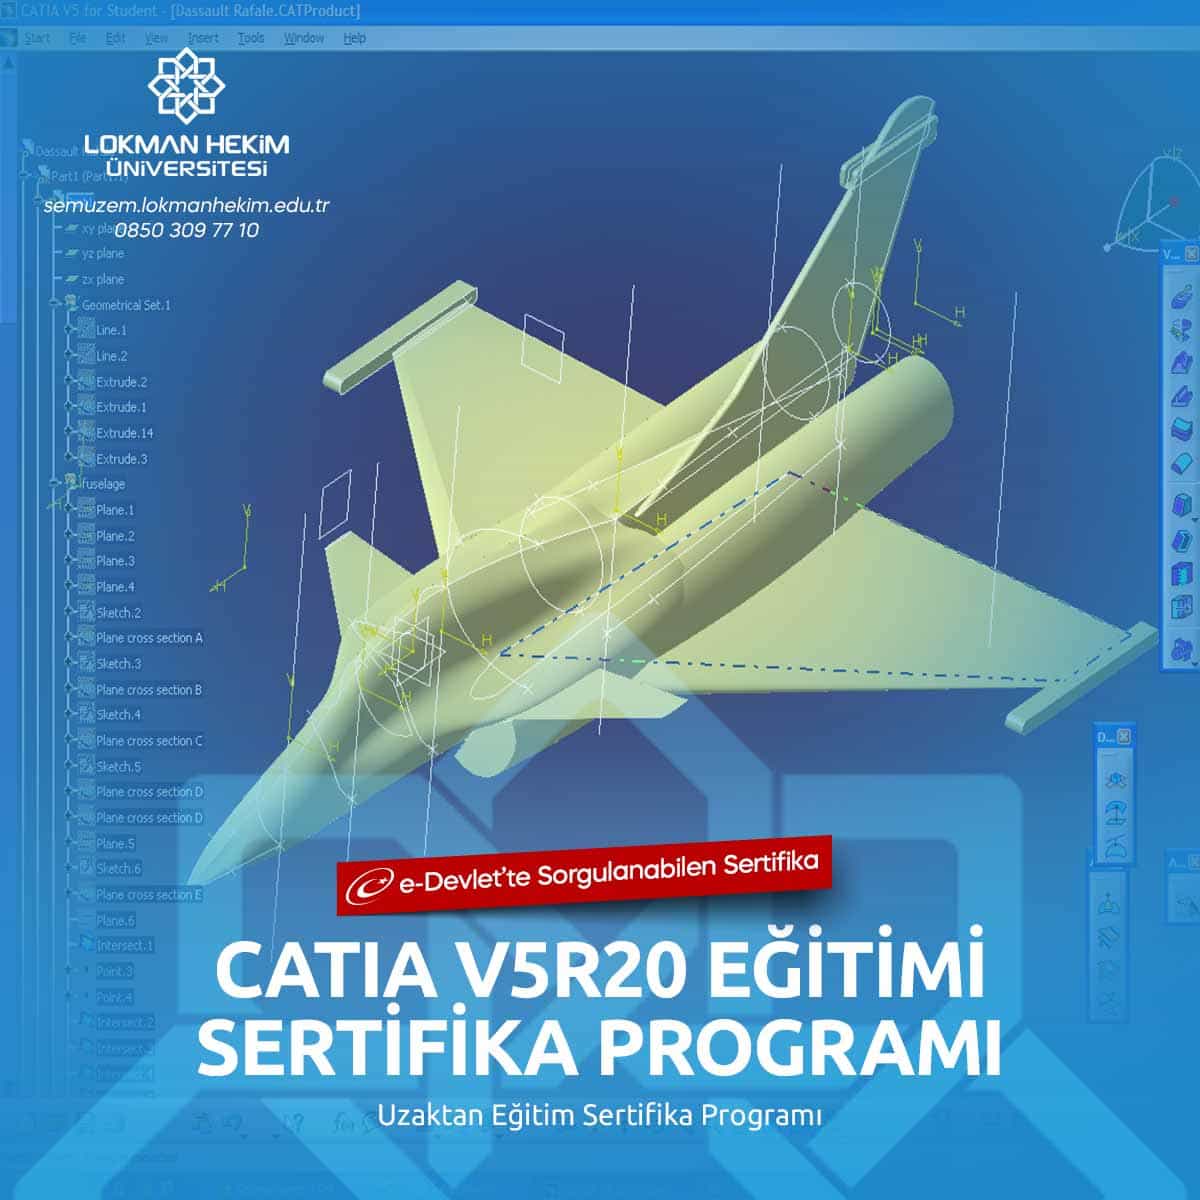 Catia V5R20 Eğitimi Sertifika Programı